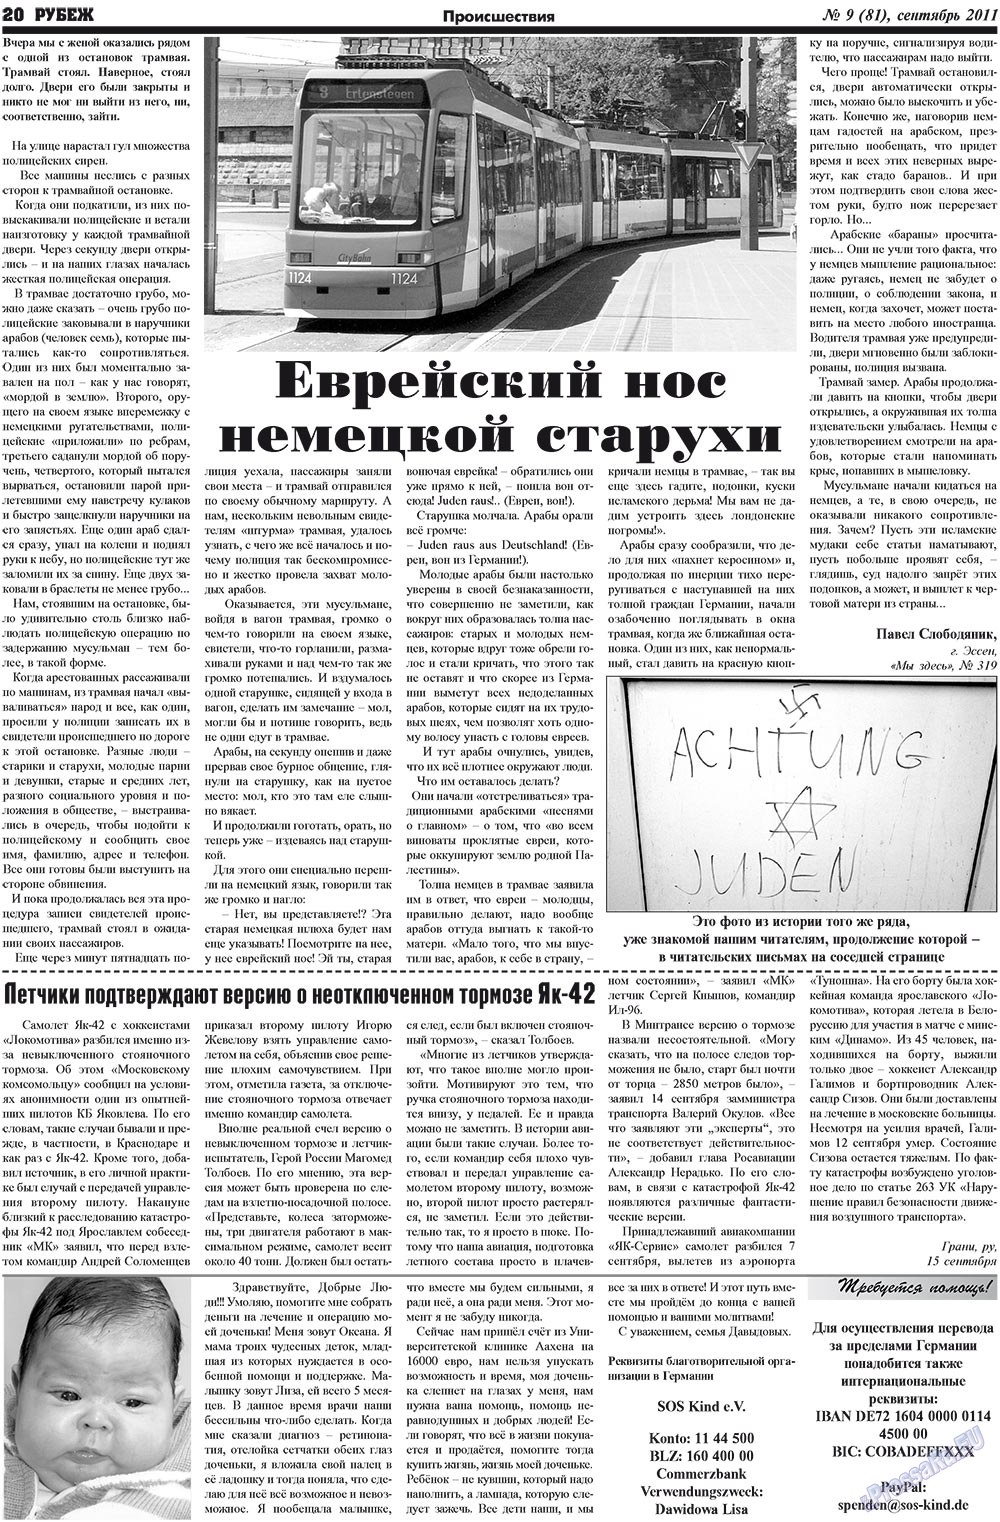 Рубеж, газета. 2011 №9 стр.20